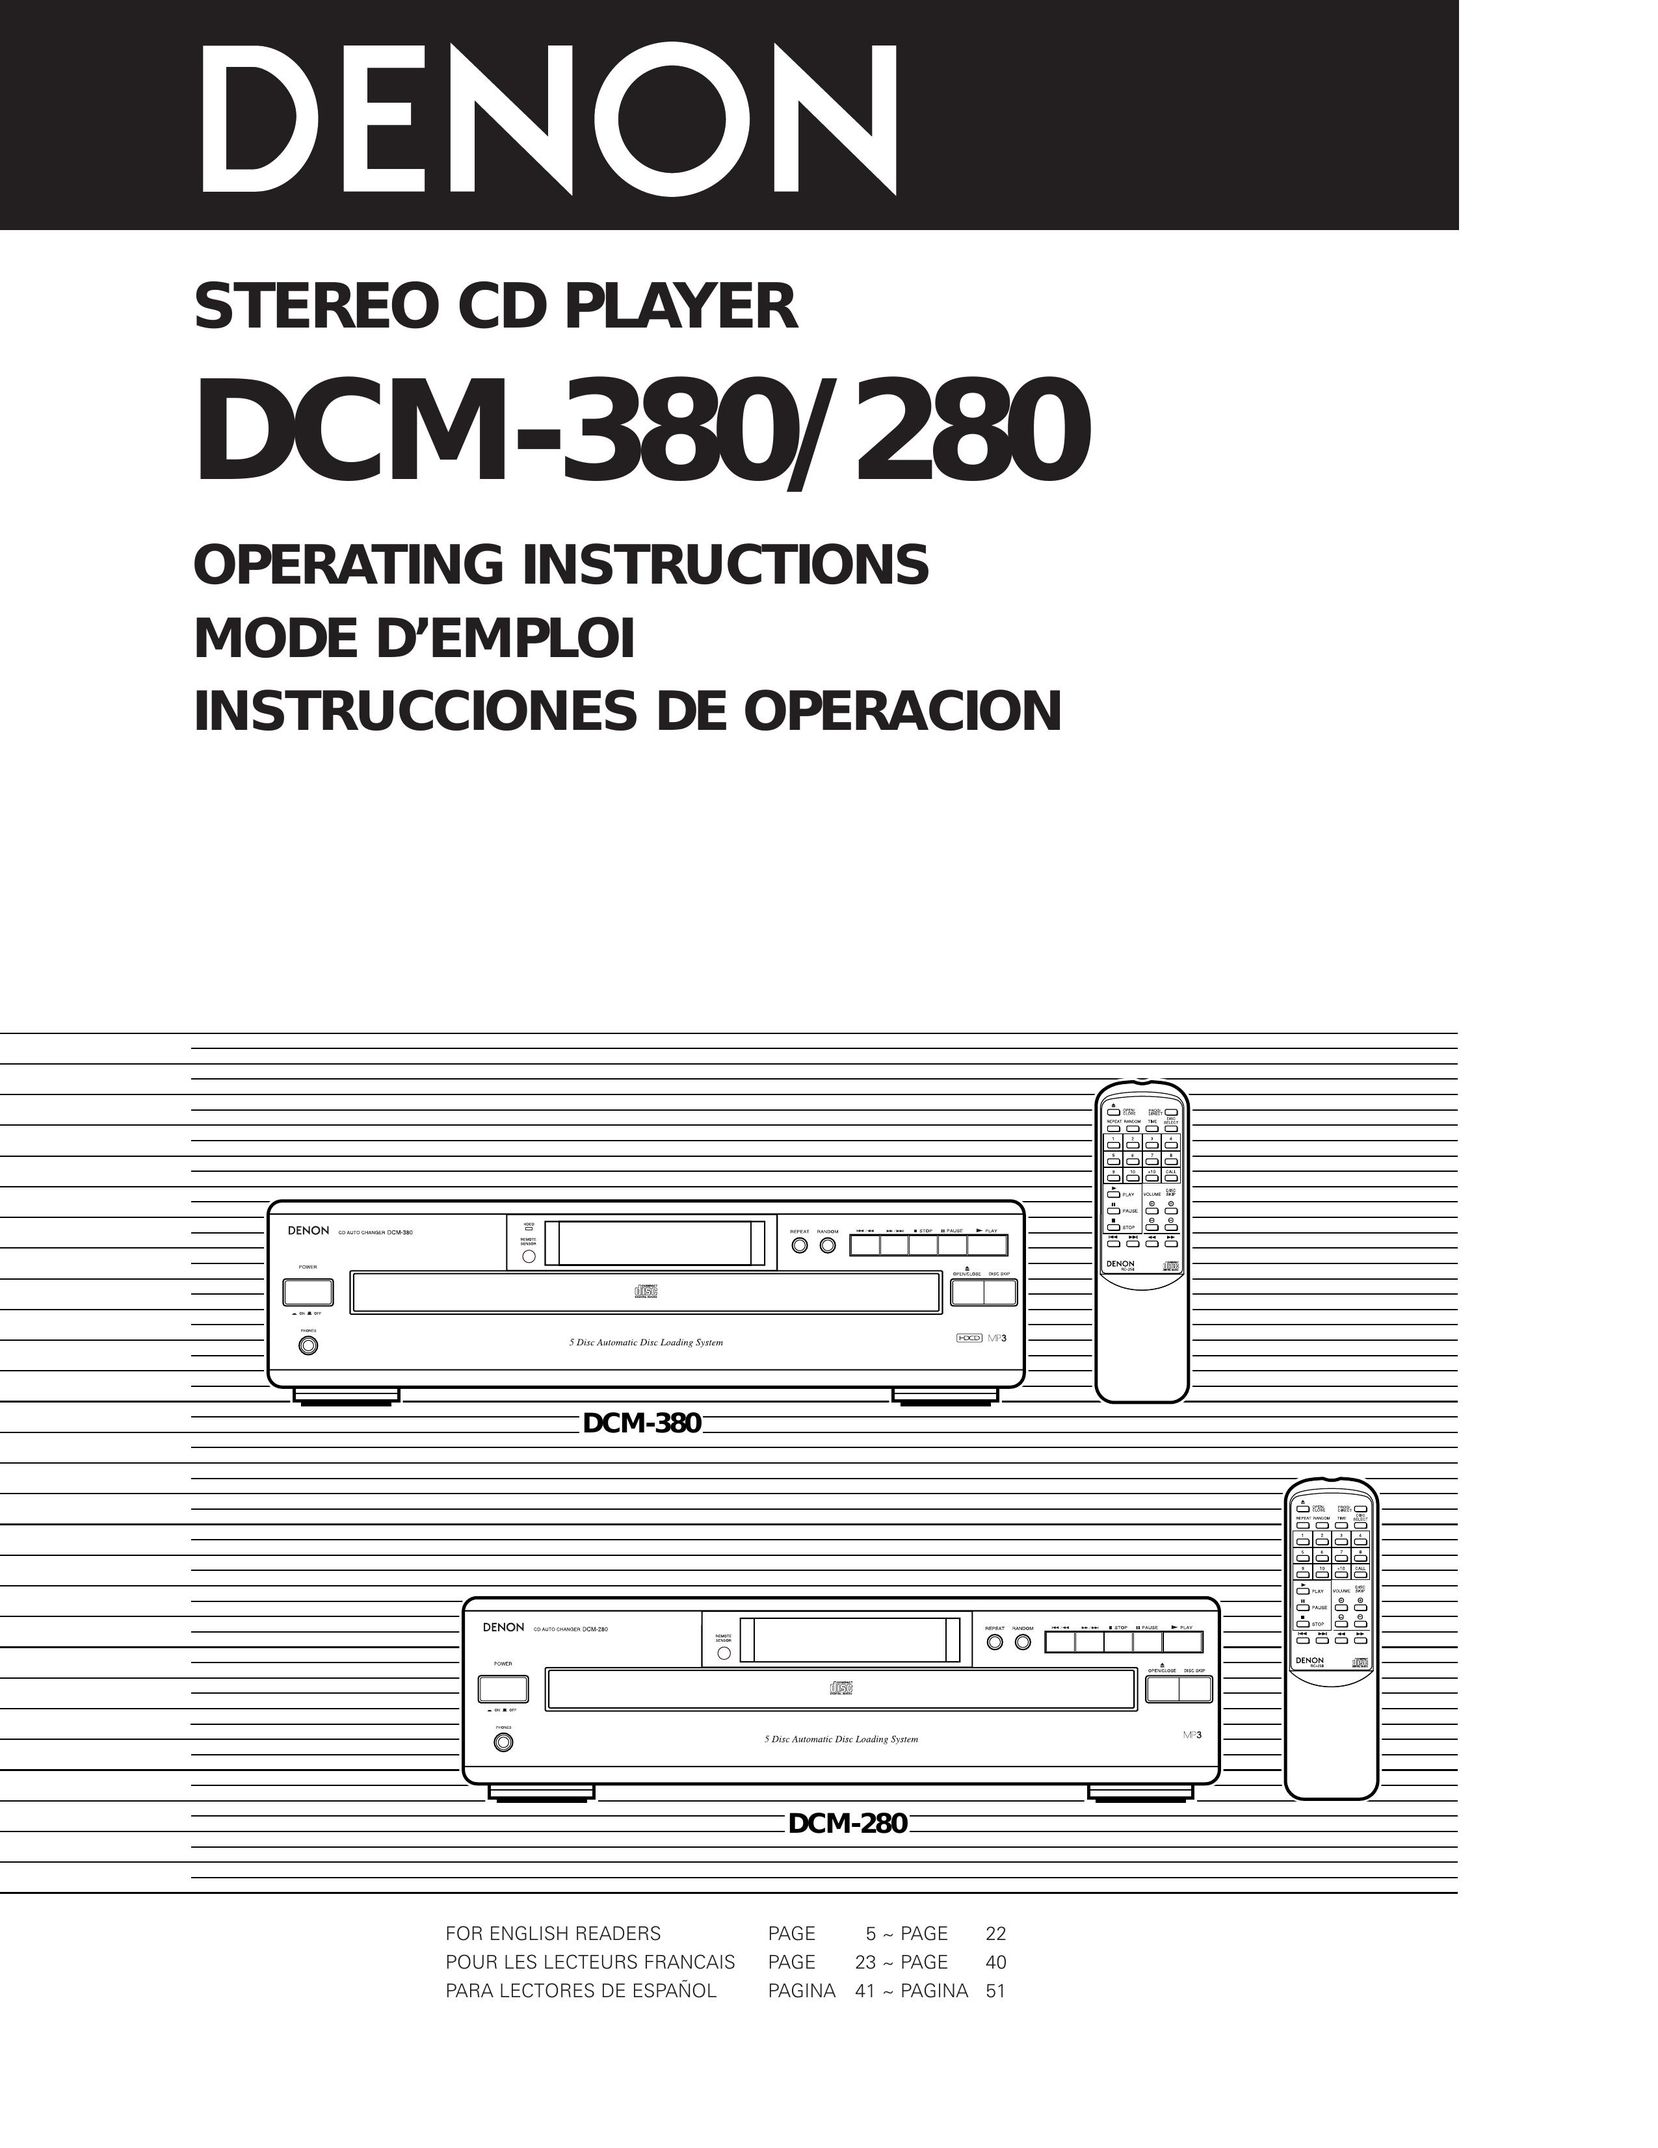 Denon DCM-280 Car Stereo System User Manual